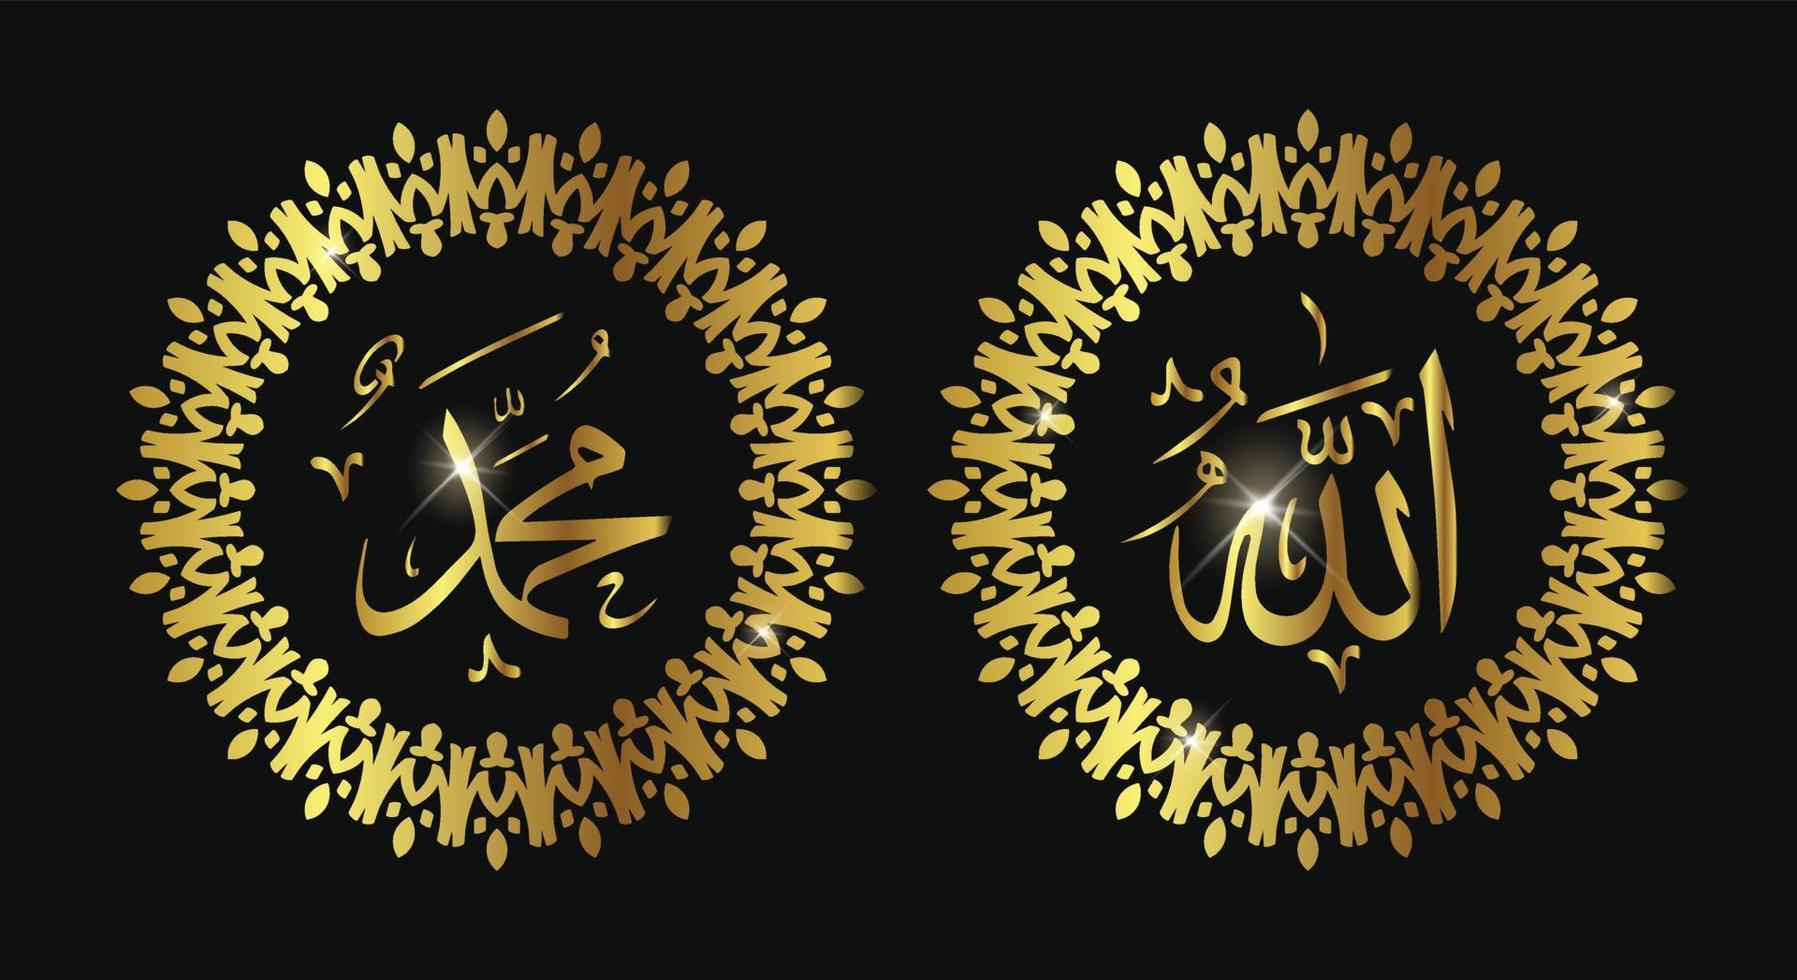 allah muhammad arabische kalligrafie, islamische wandkunstdekoration vektor